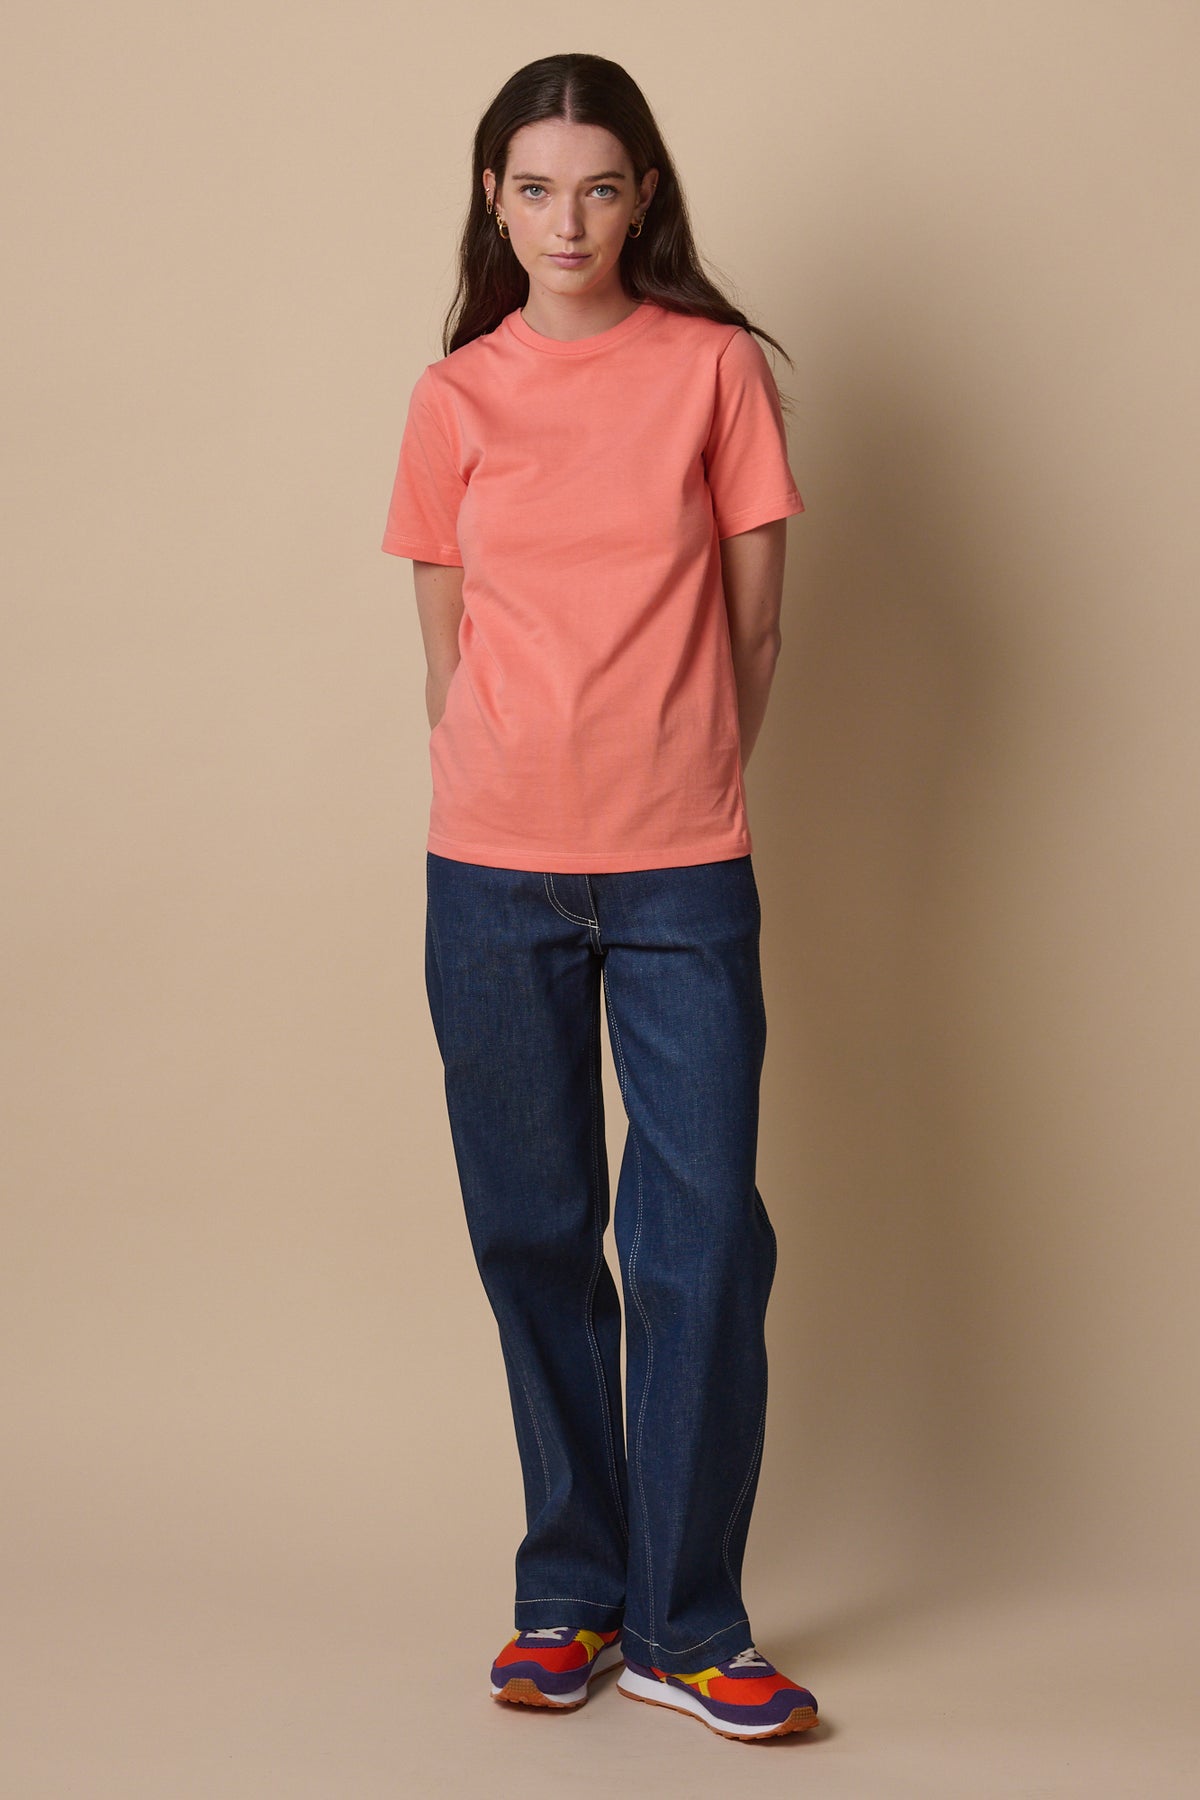 
            Full body image of female wearing short sleeve t shirt in peach